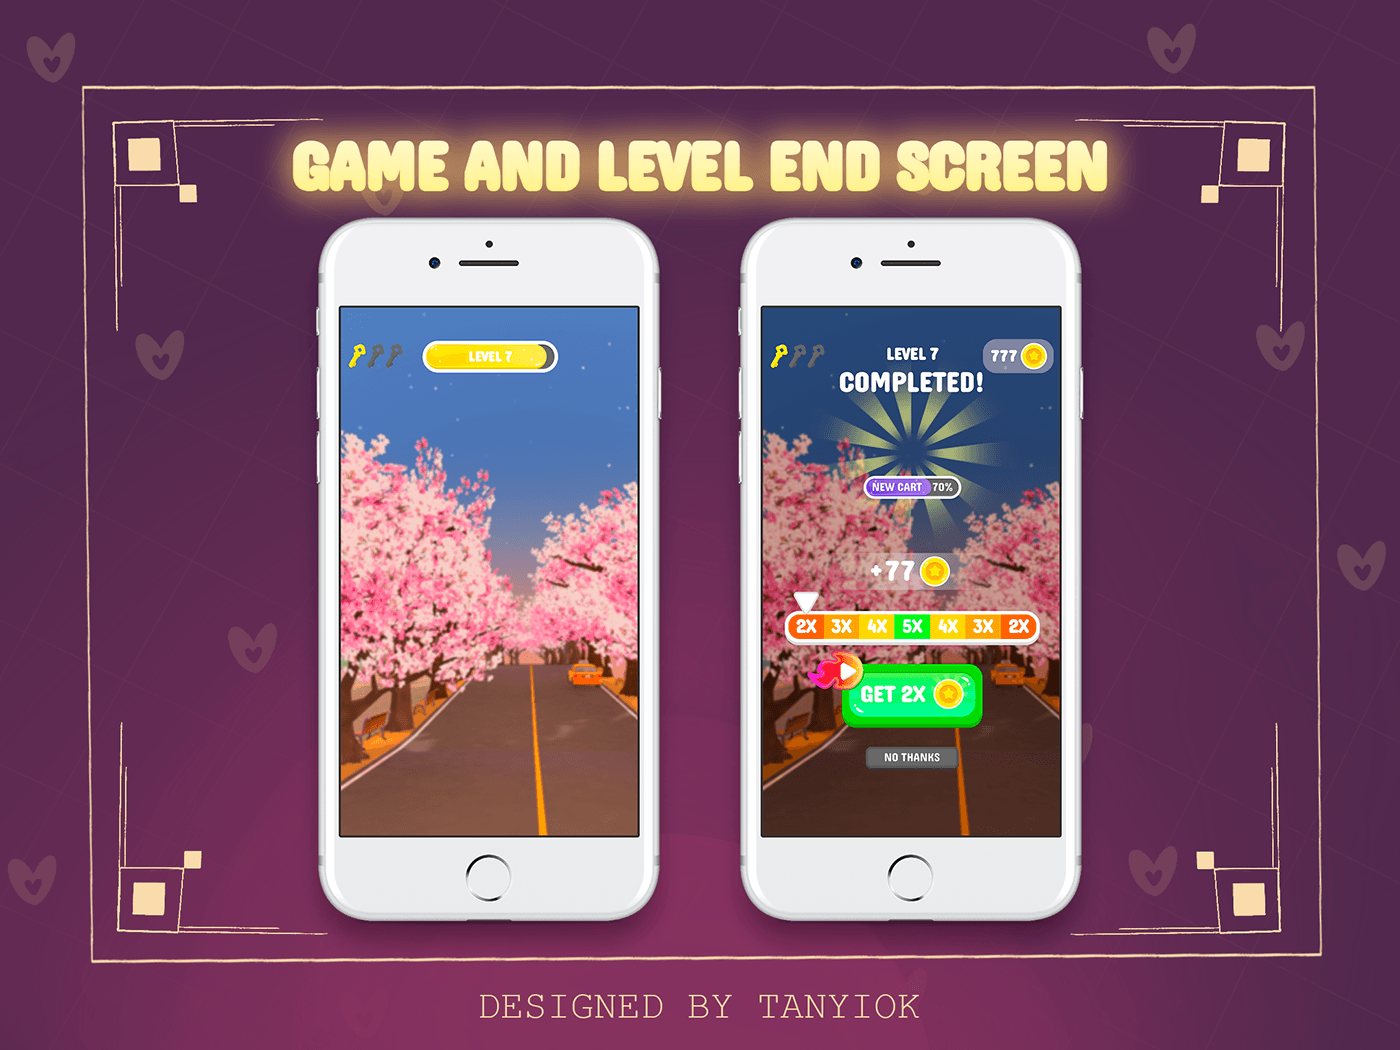 -ˋ Game screen
-ˋ Level end screen